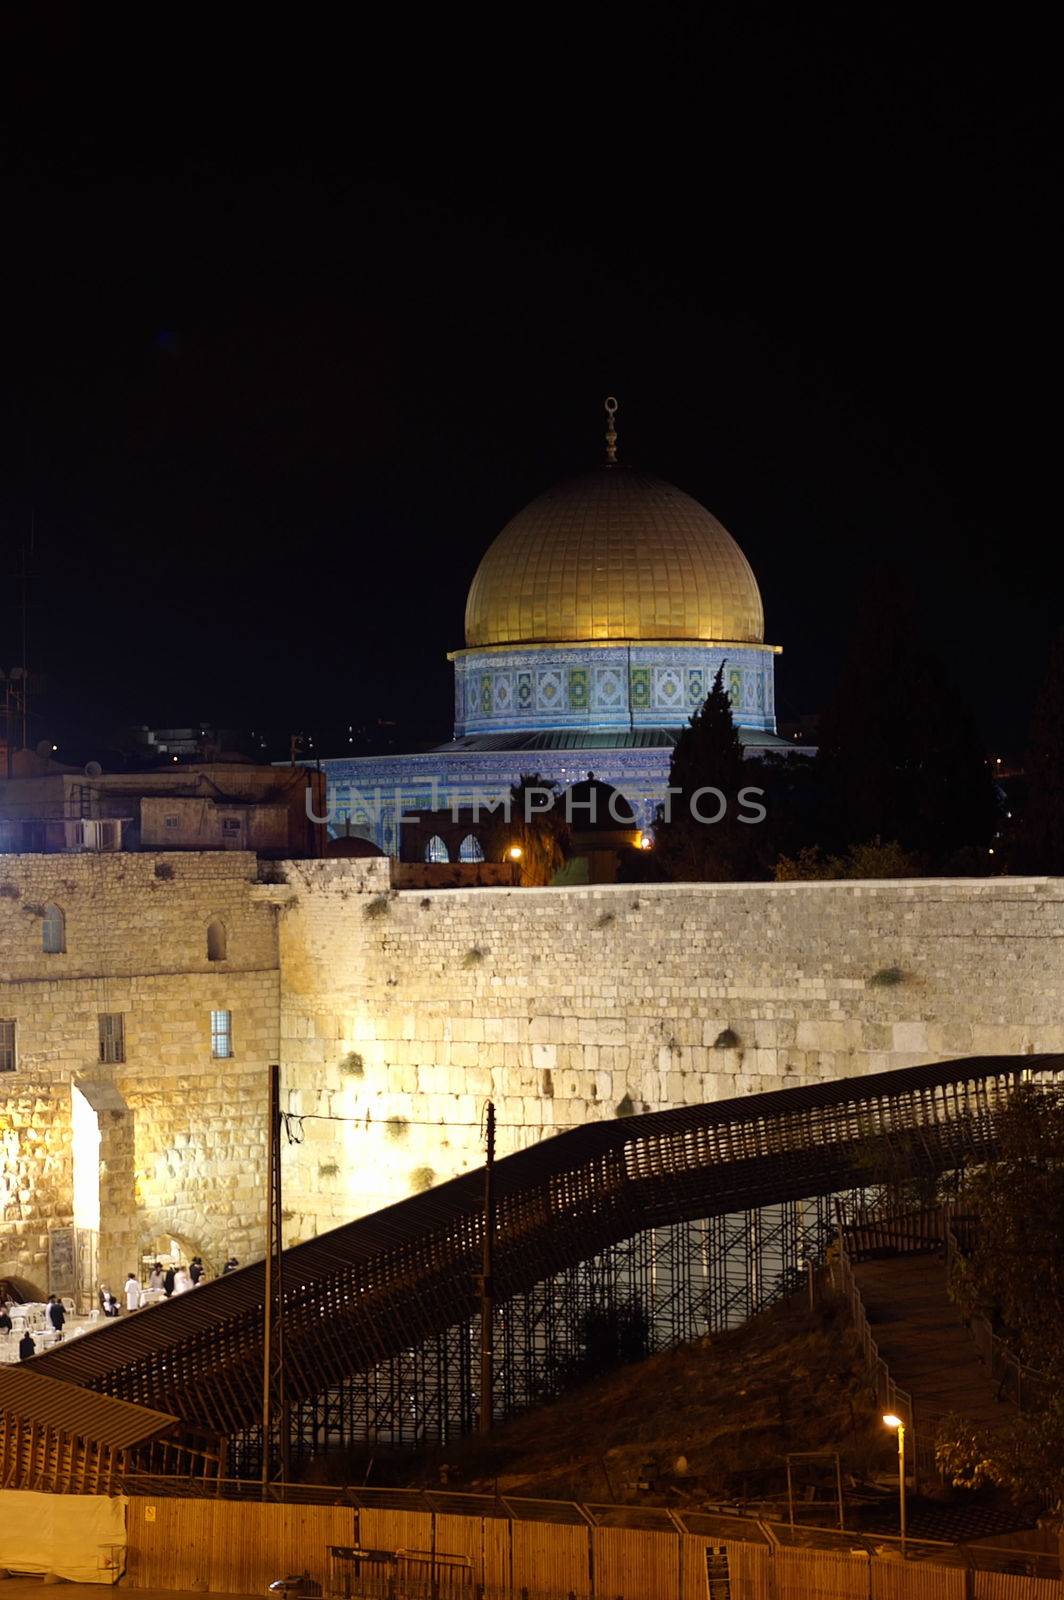 jerusalem old city at evening by javax